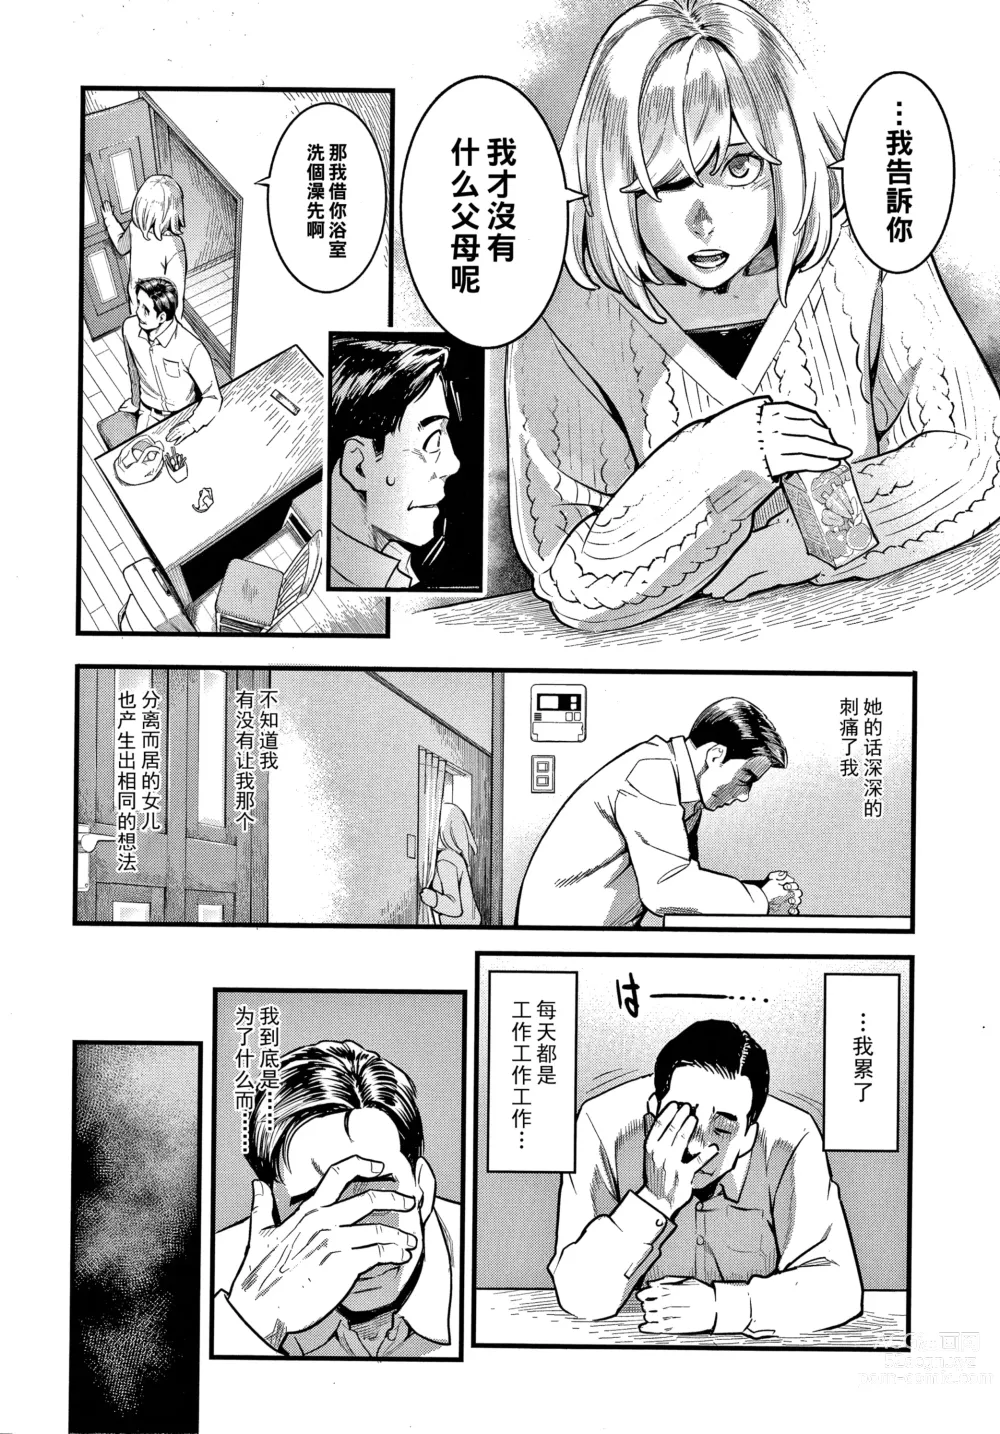 Page 6 of manga Shikujiri My Home